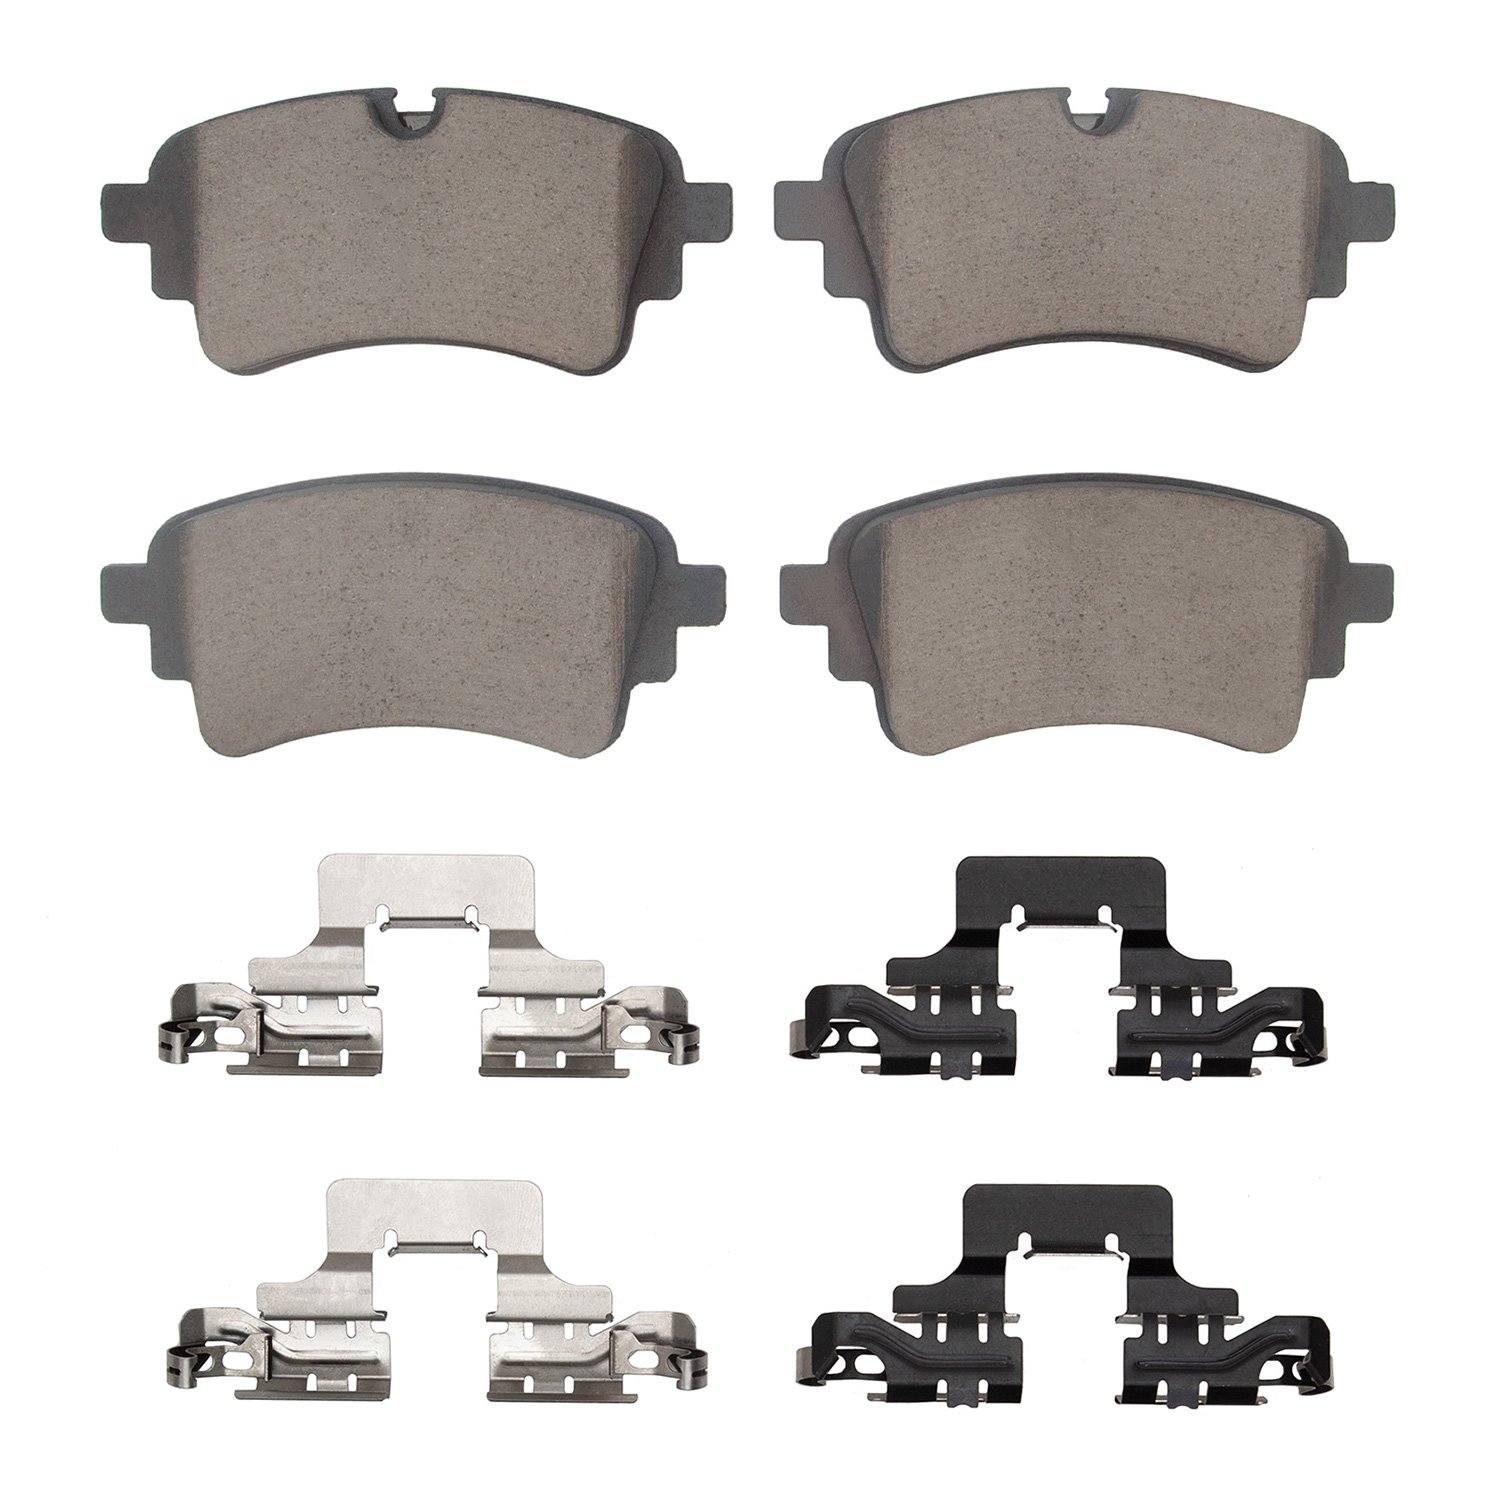 1310-2364-02 3000-Series Ceramic Brake Pads & Hardware Kit, Fits Select Audi/Volkswagen, Position: Rear